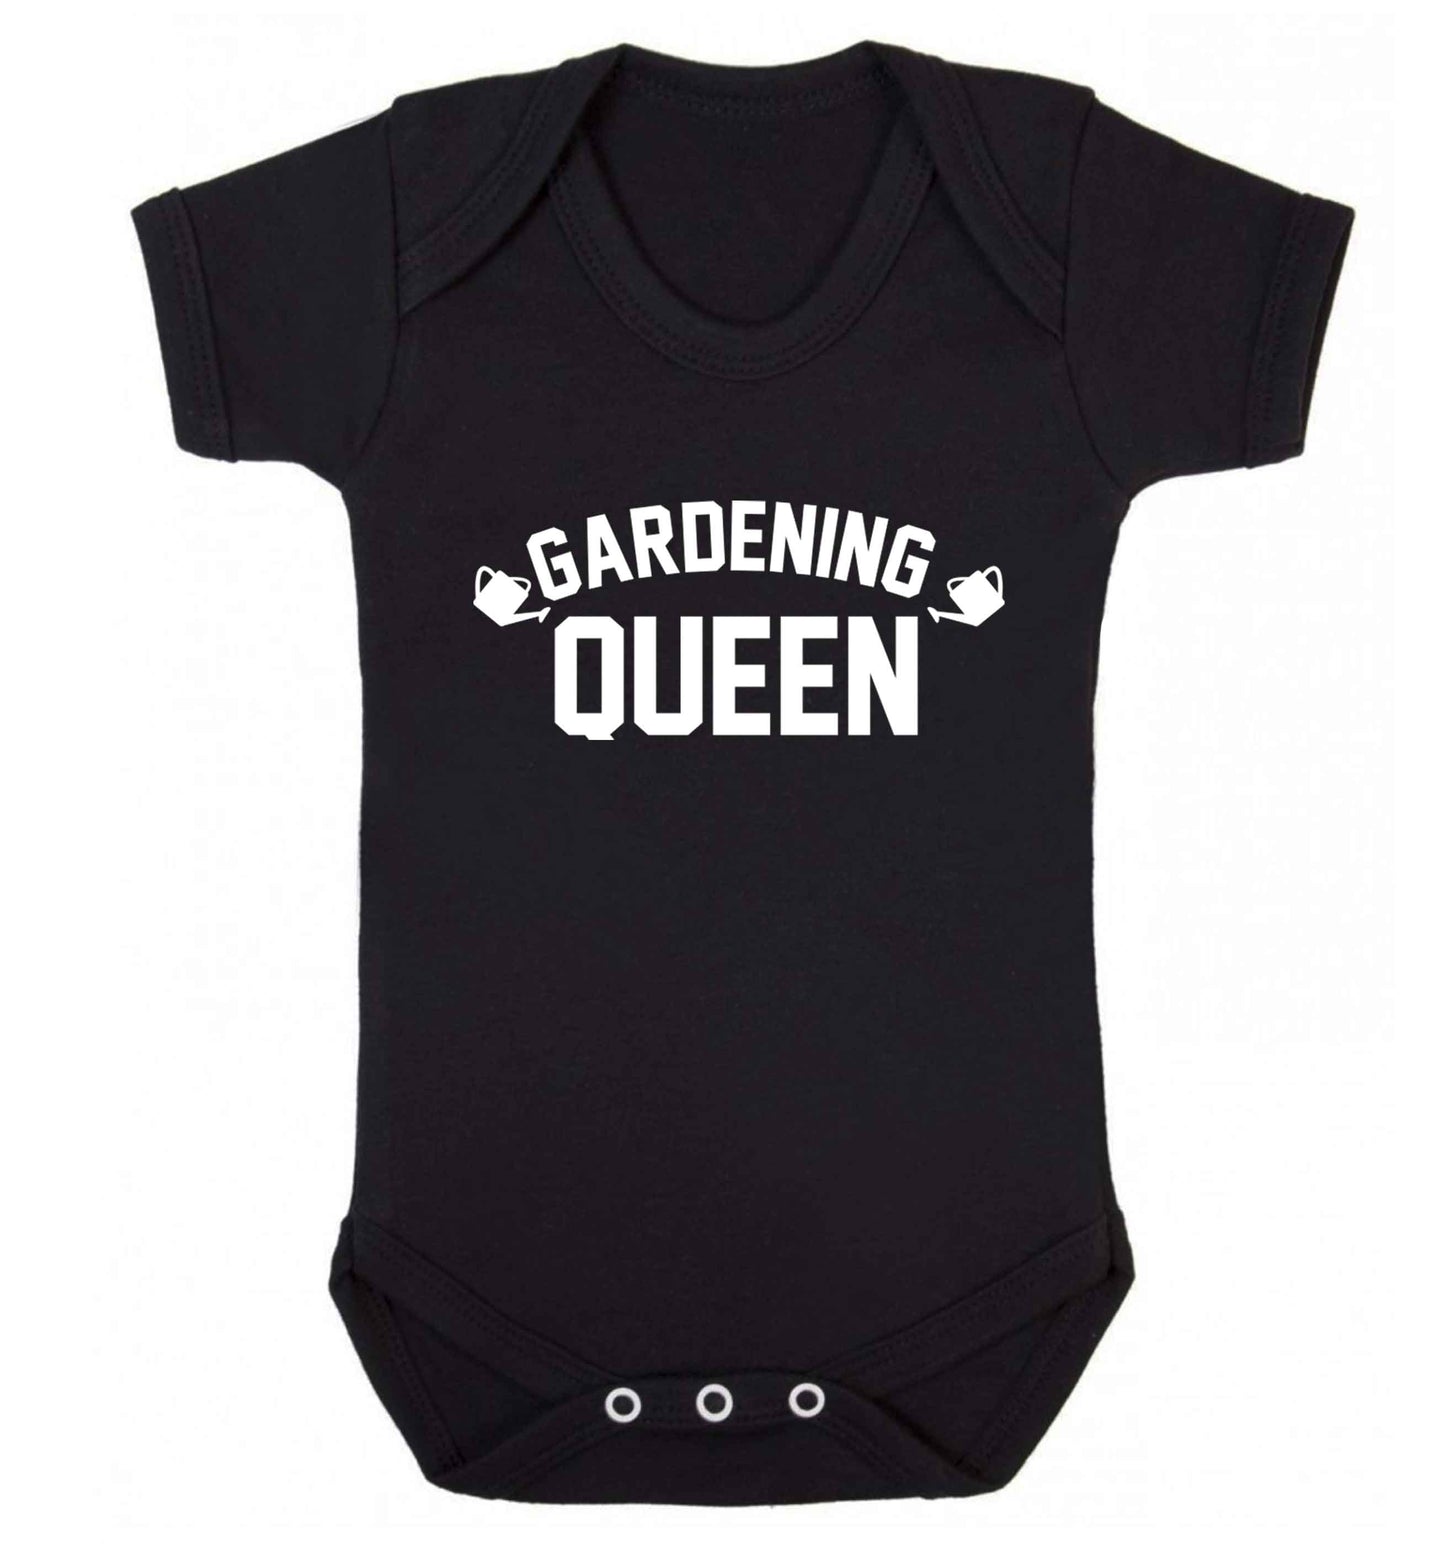 Gardening queen Baby Vest black 18-24 months